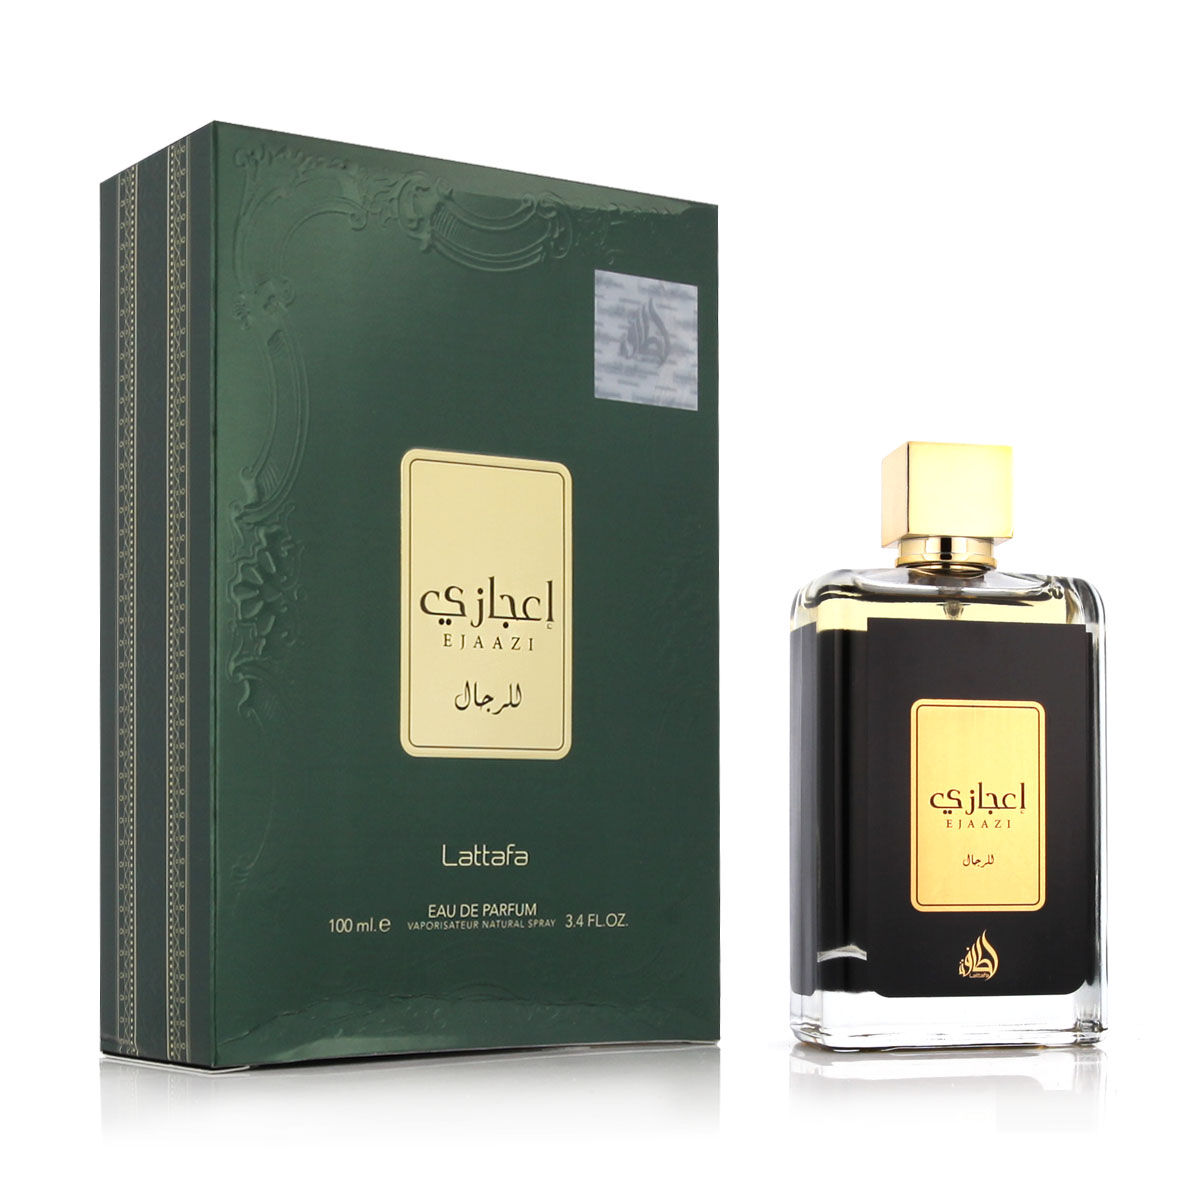 Parfum Unisex Lattafa EDP Ejaazi (100 ml)